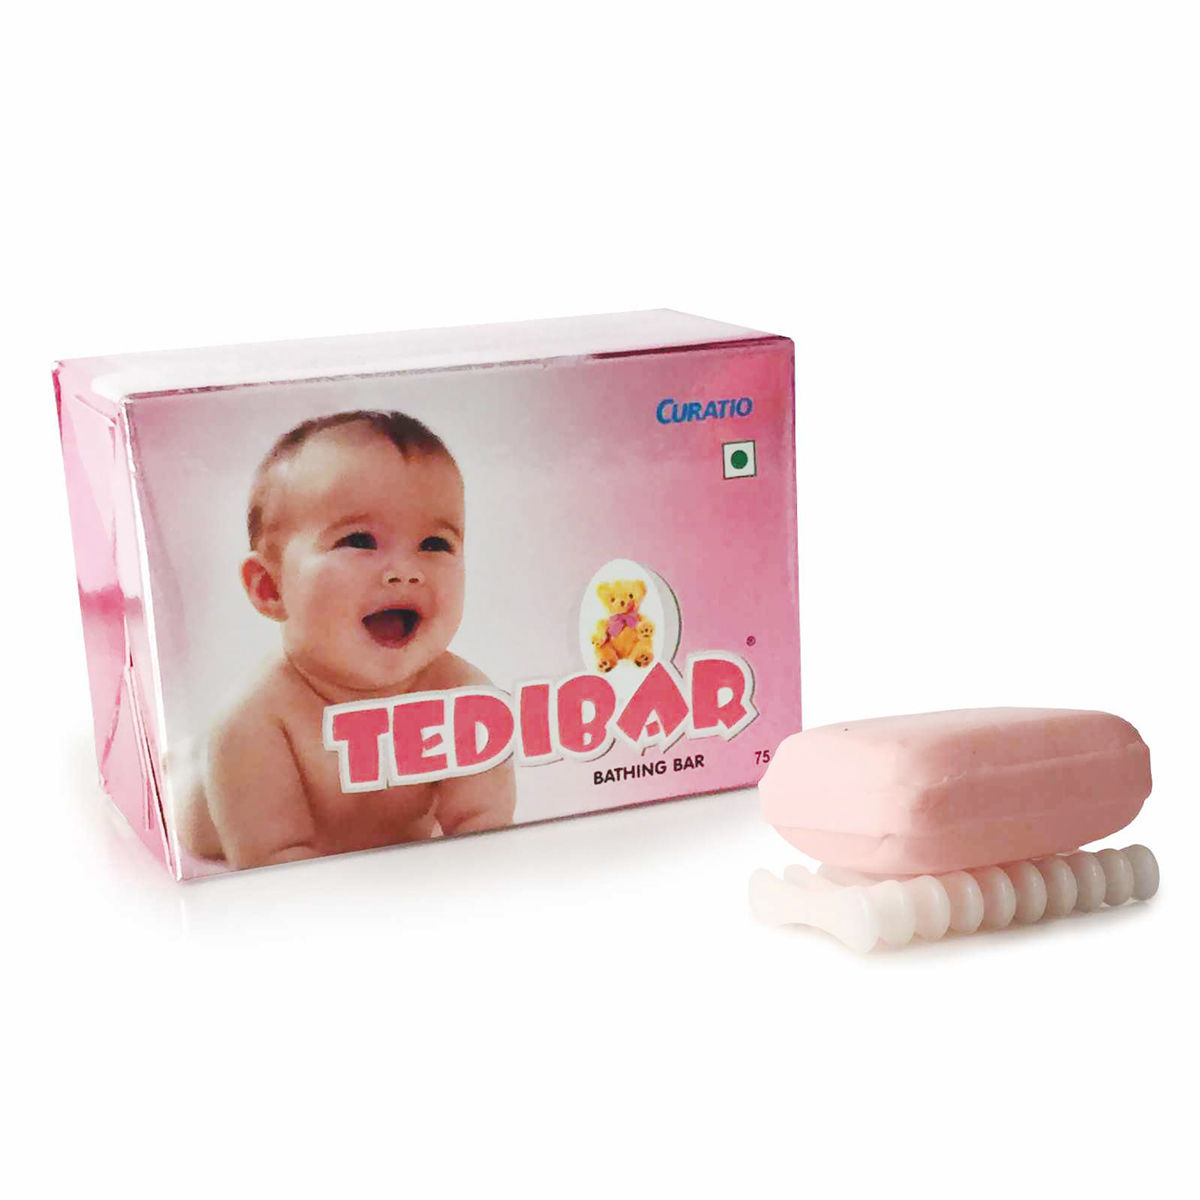 Buy Tedibar Bathing Bar, 75 gm Online